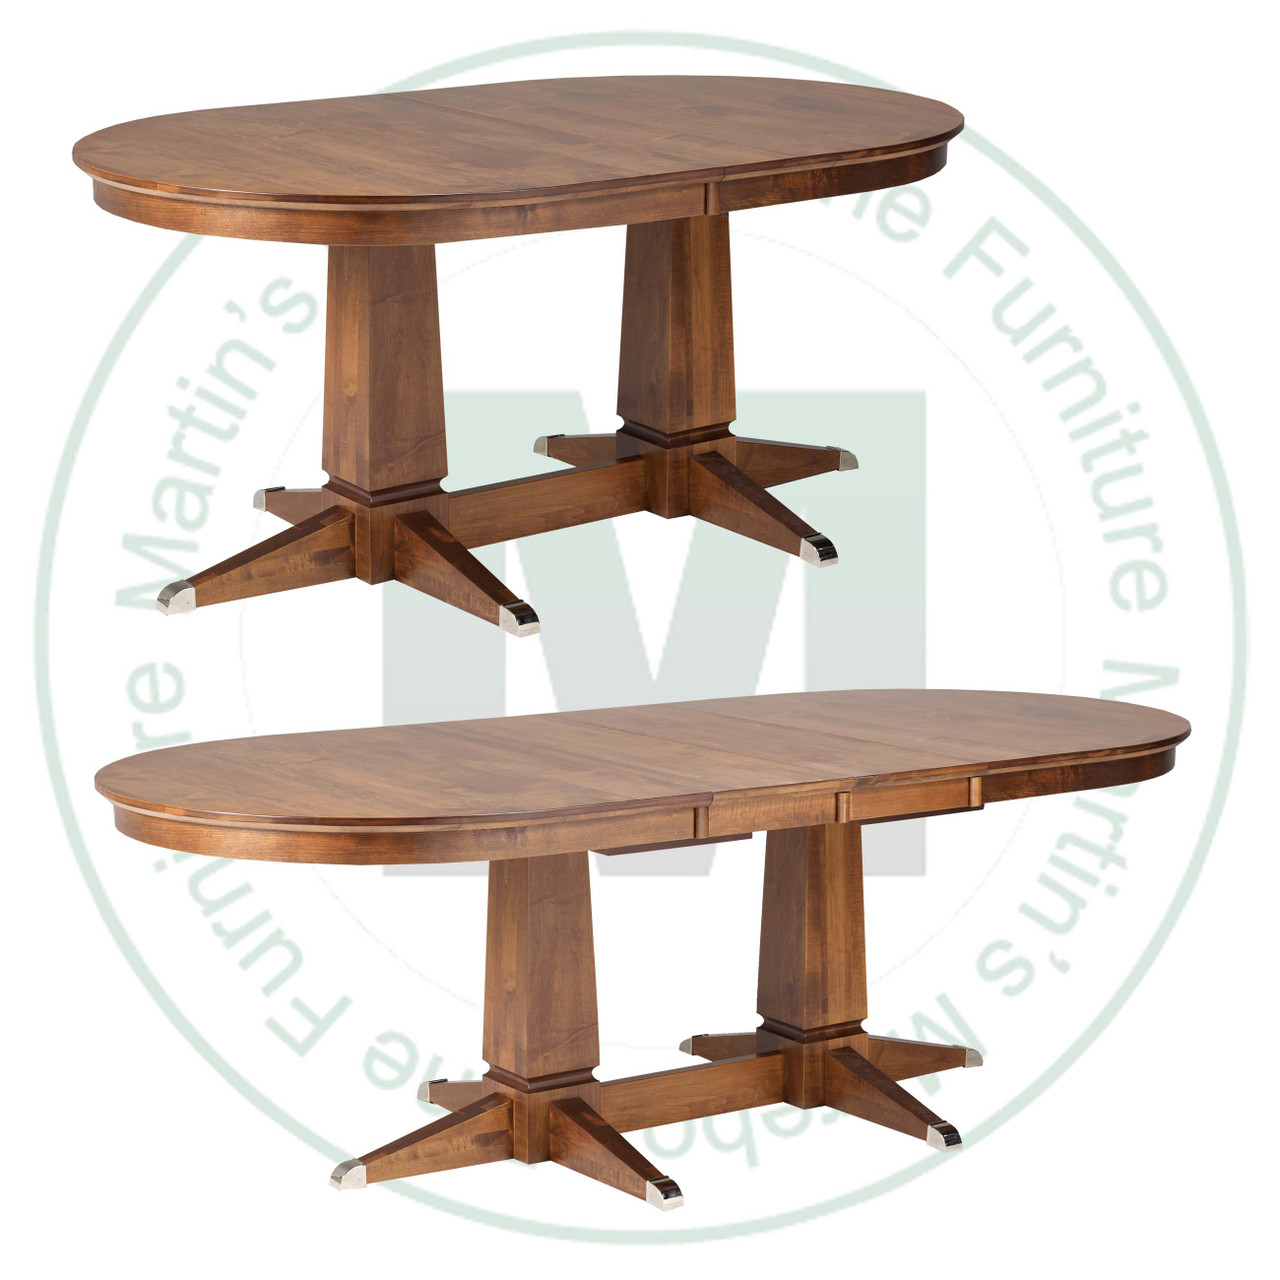 Oak Sweden Double Pedestal Table 48''D x 84''W x 30''H With 3 - 12'' Leaves